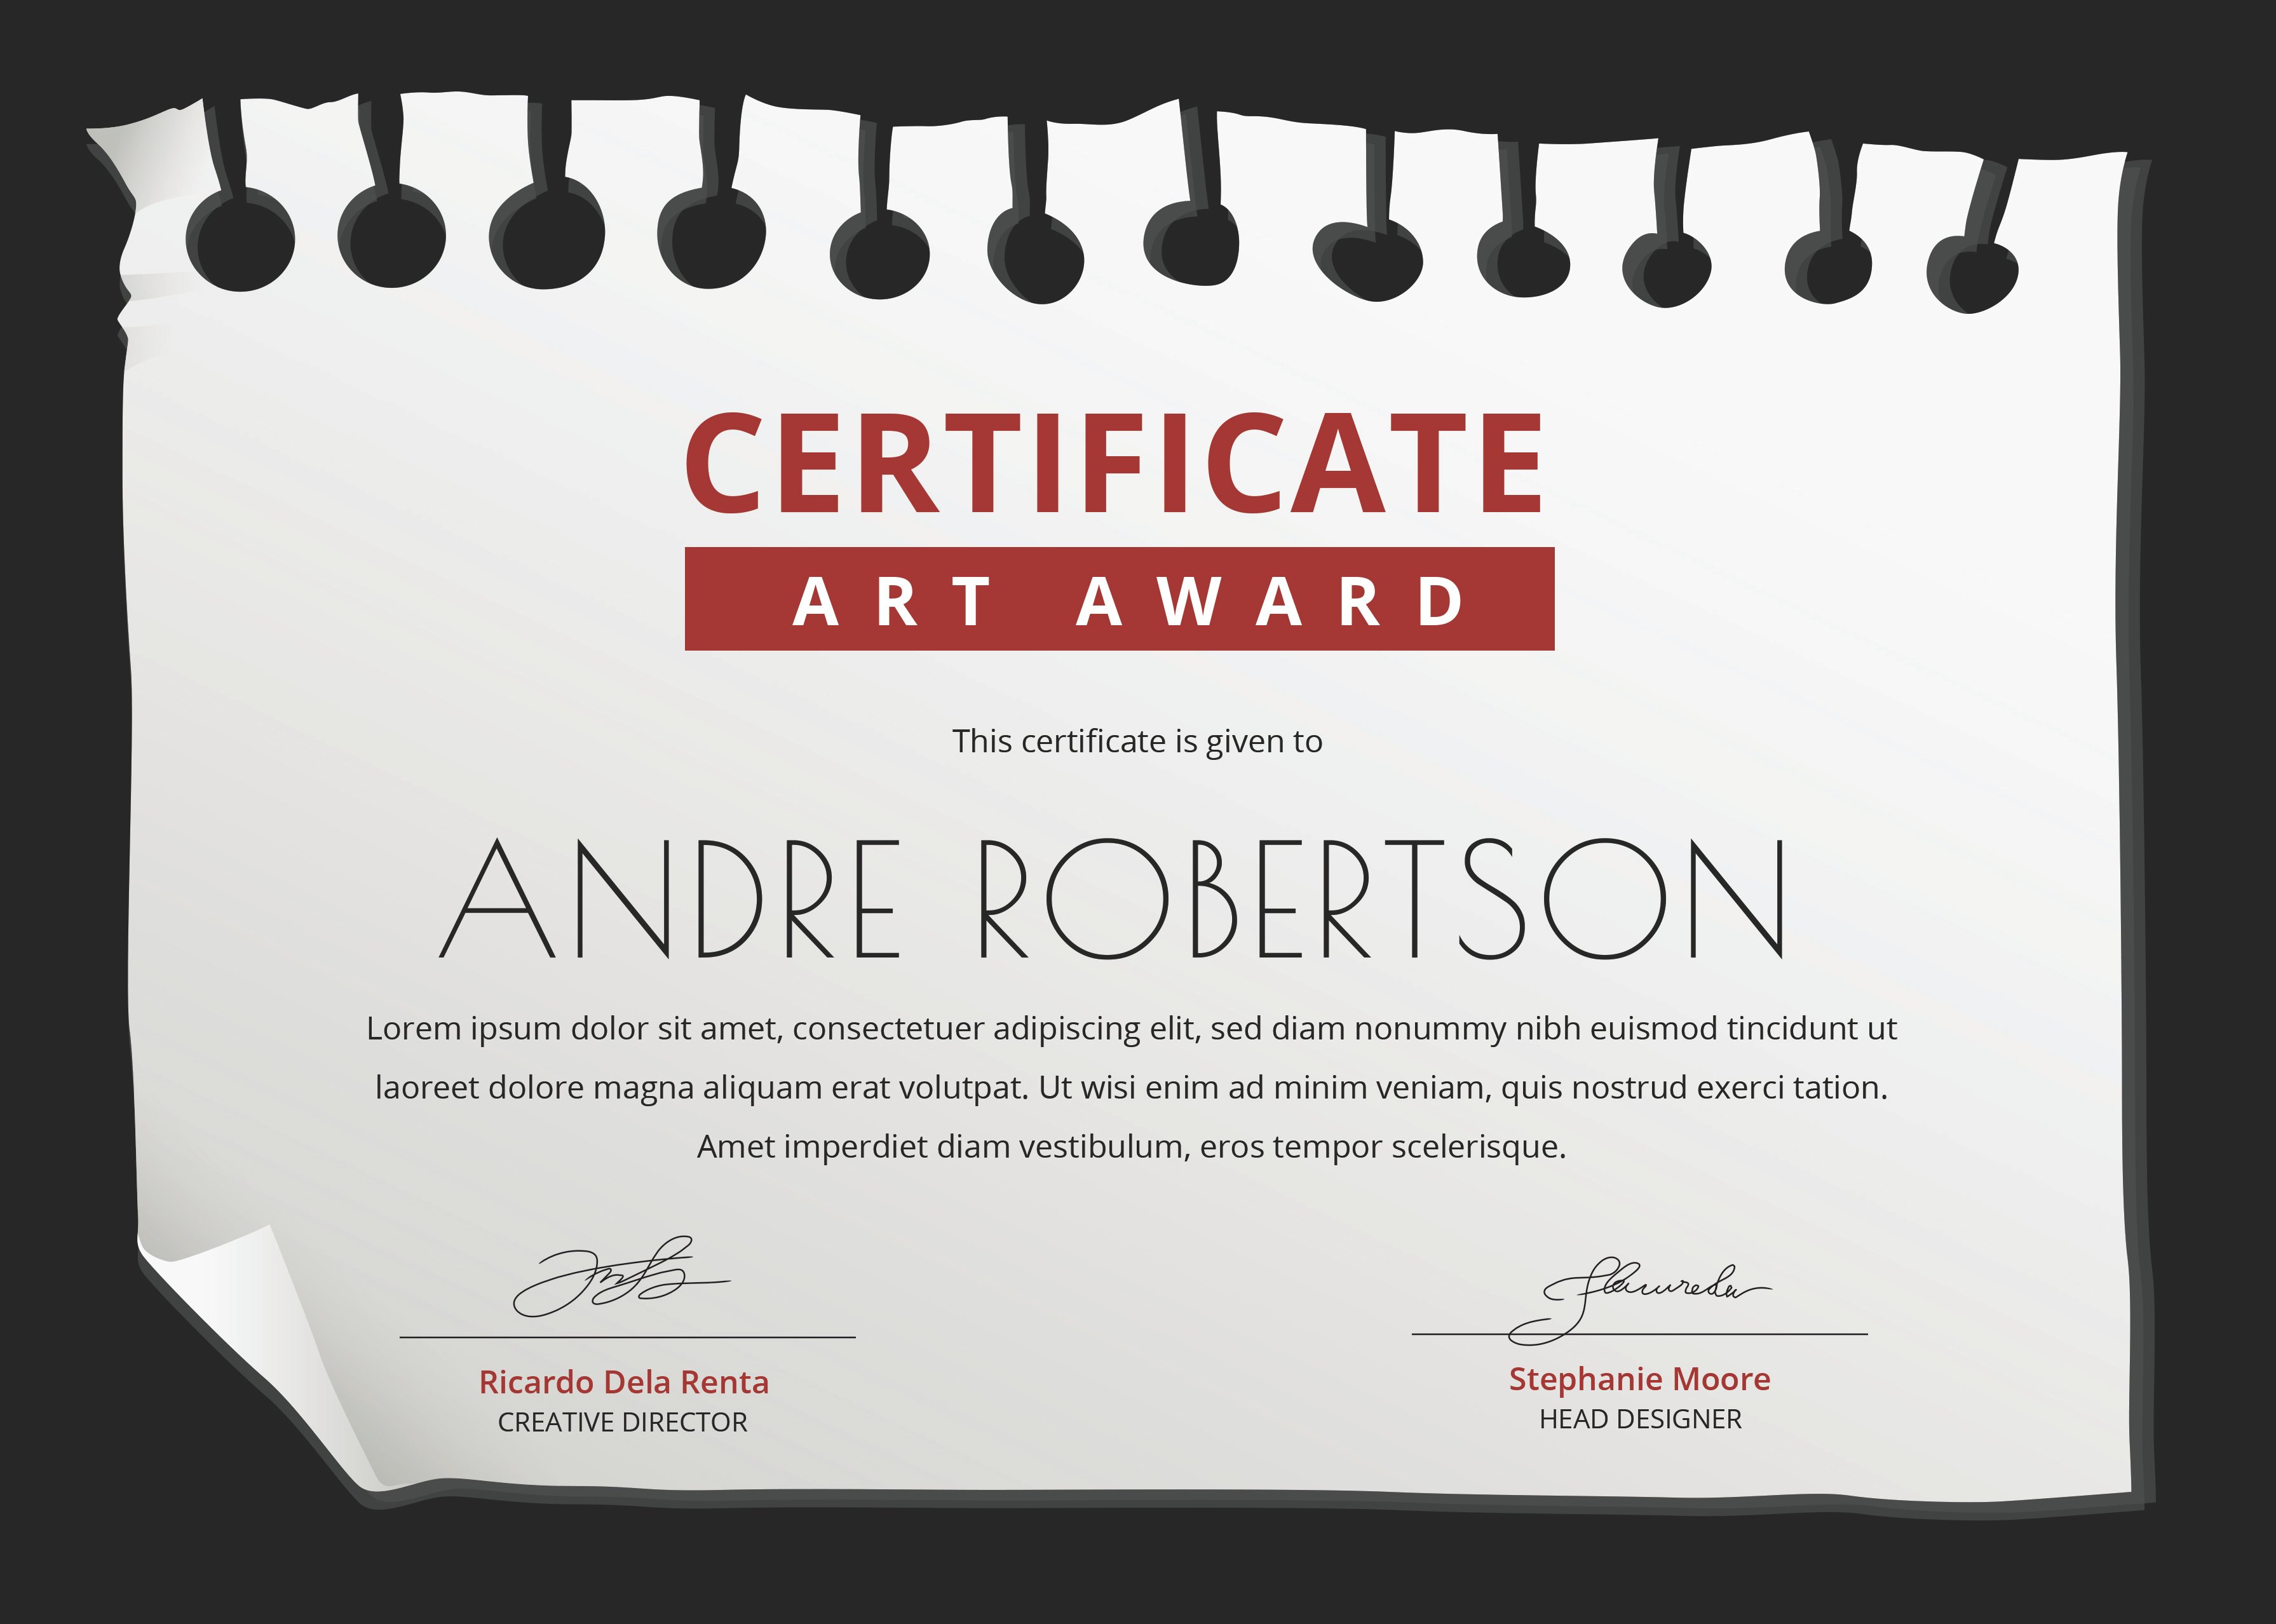 Art Award Certificate Template Primary Classes - Bank2home.com